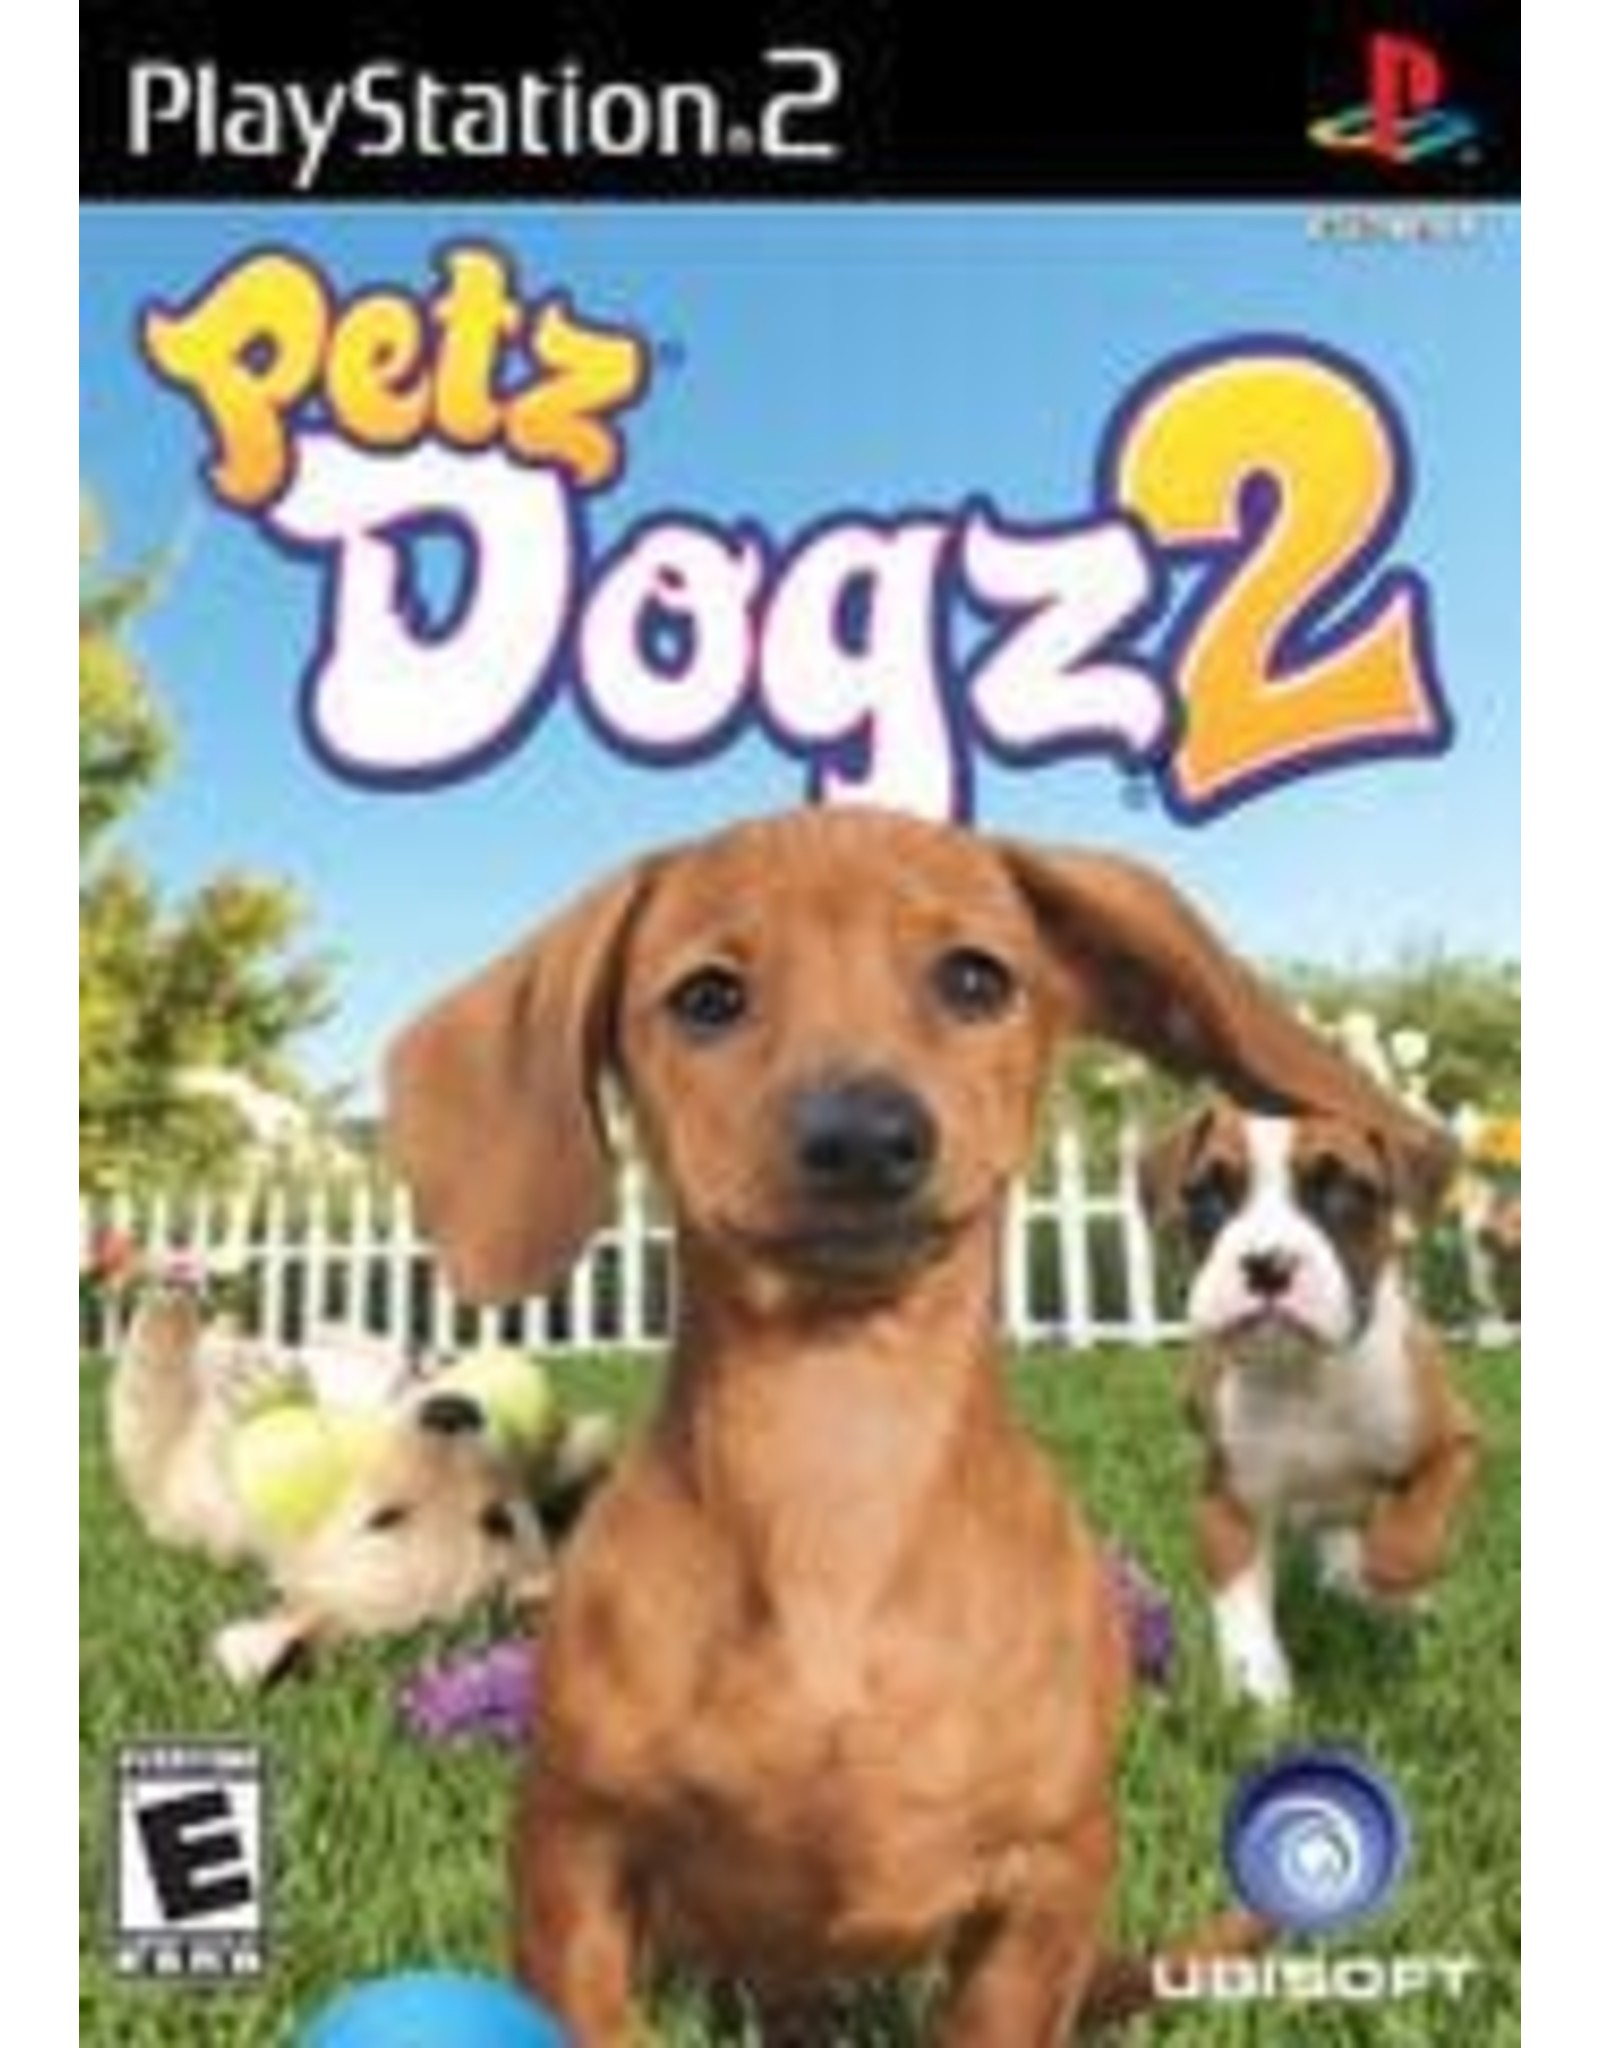 Playstation 2 Petz Dogz 2 (CiB)